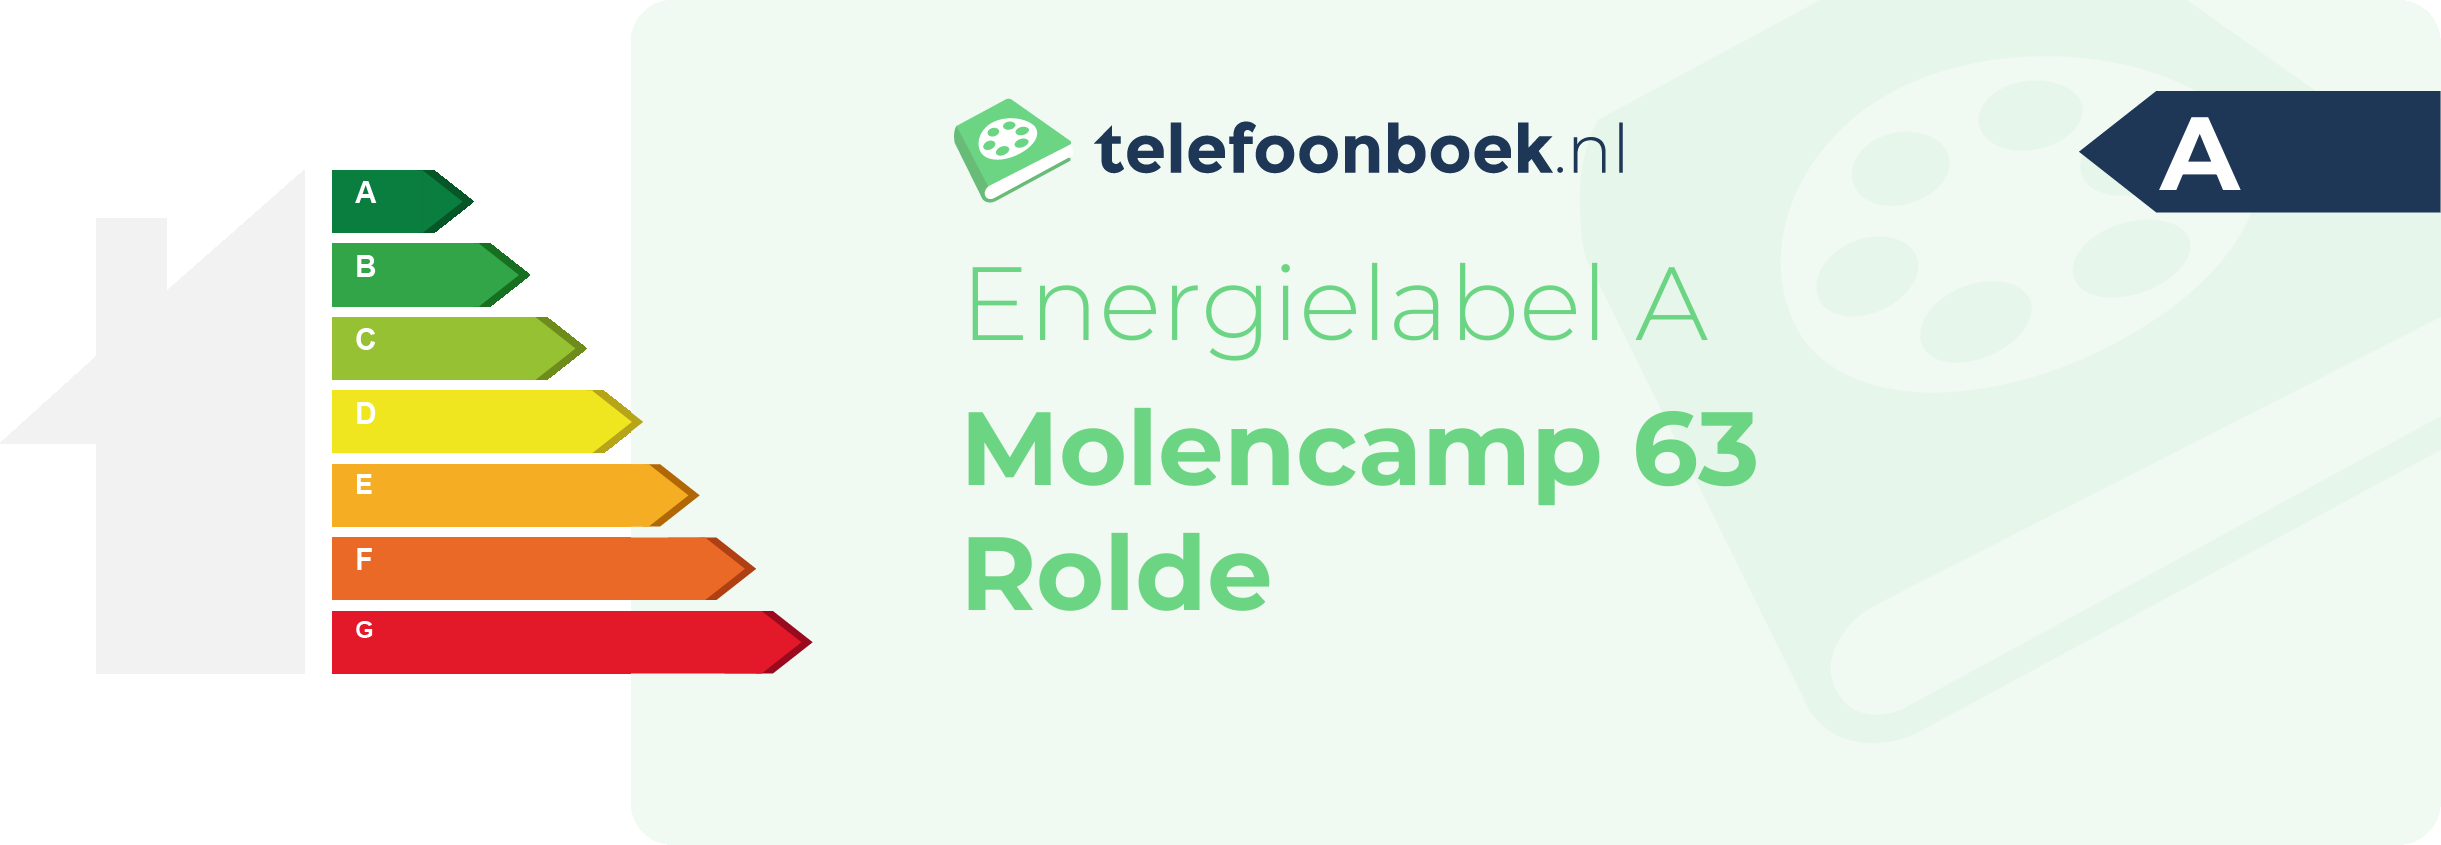 Energielabel Molencamp 63 Rolde